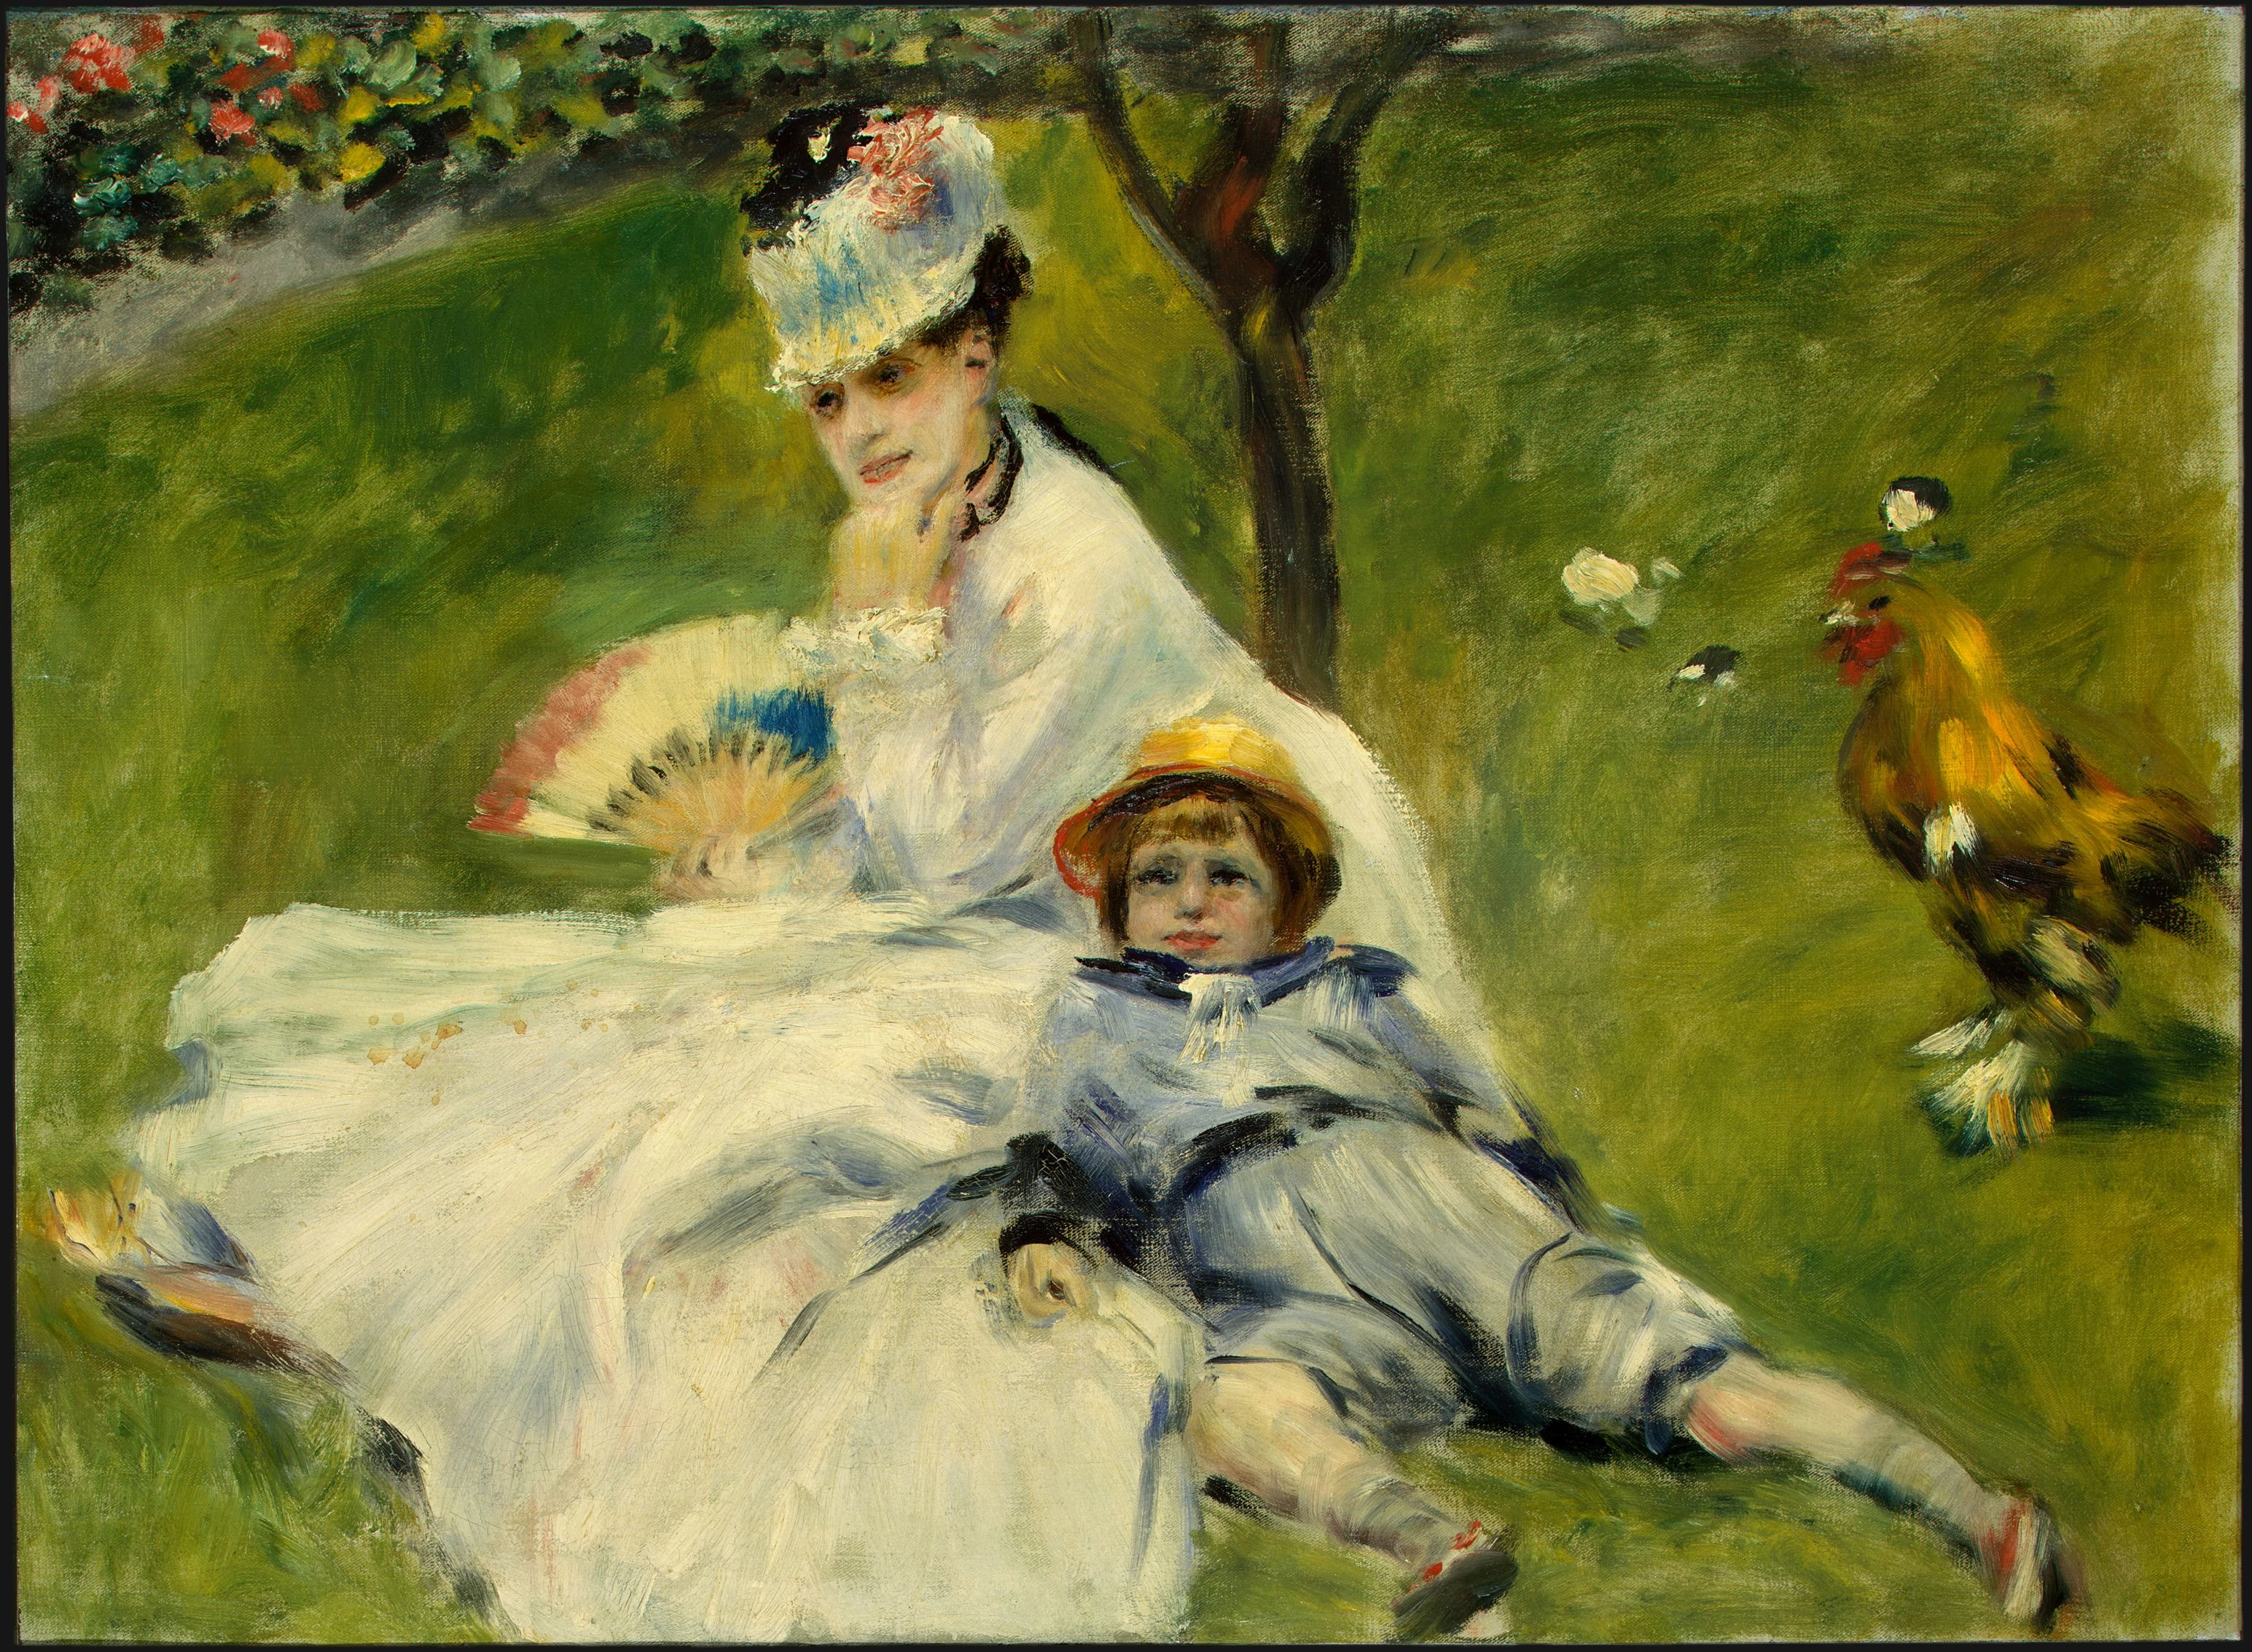 Madame Monet and her Son, Pierre-Auguste Renoir